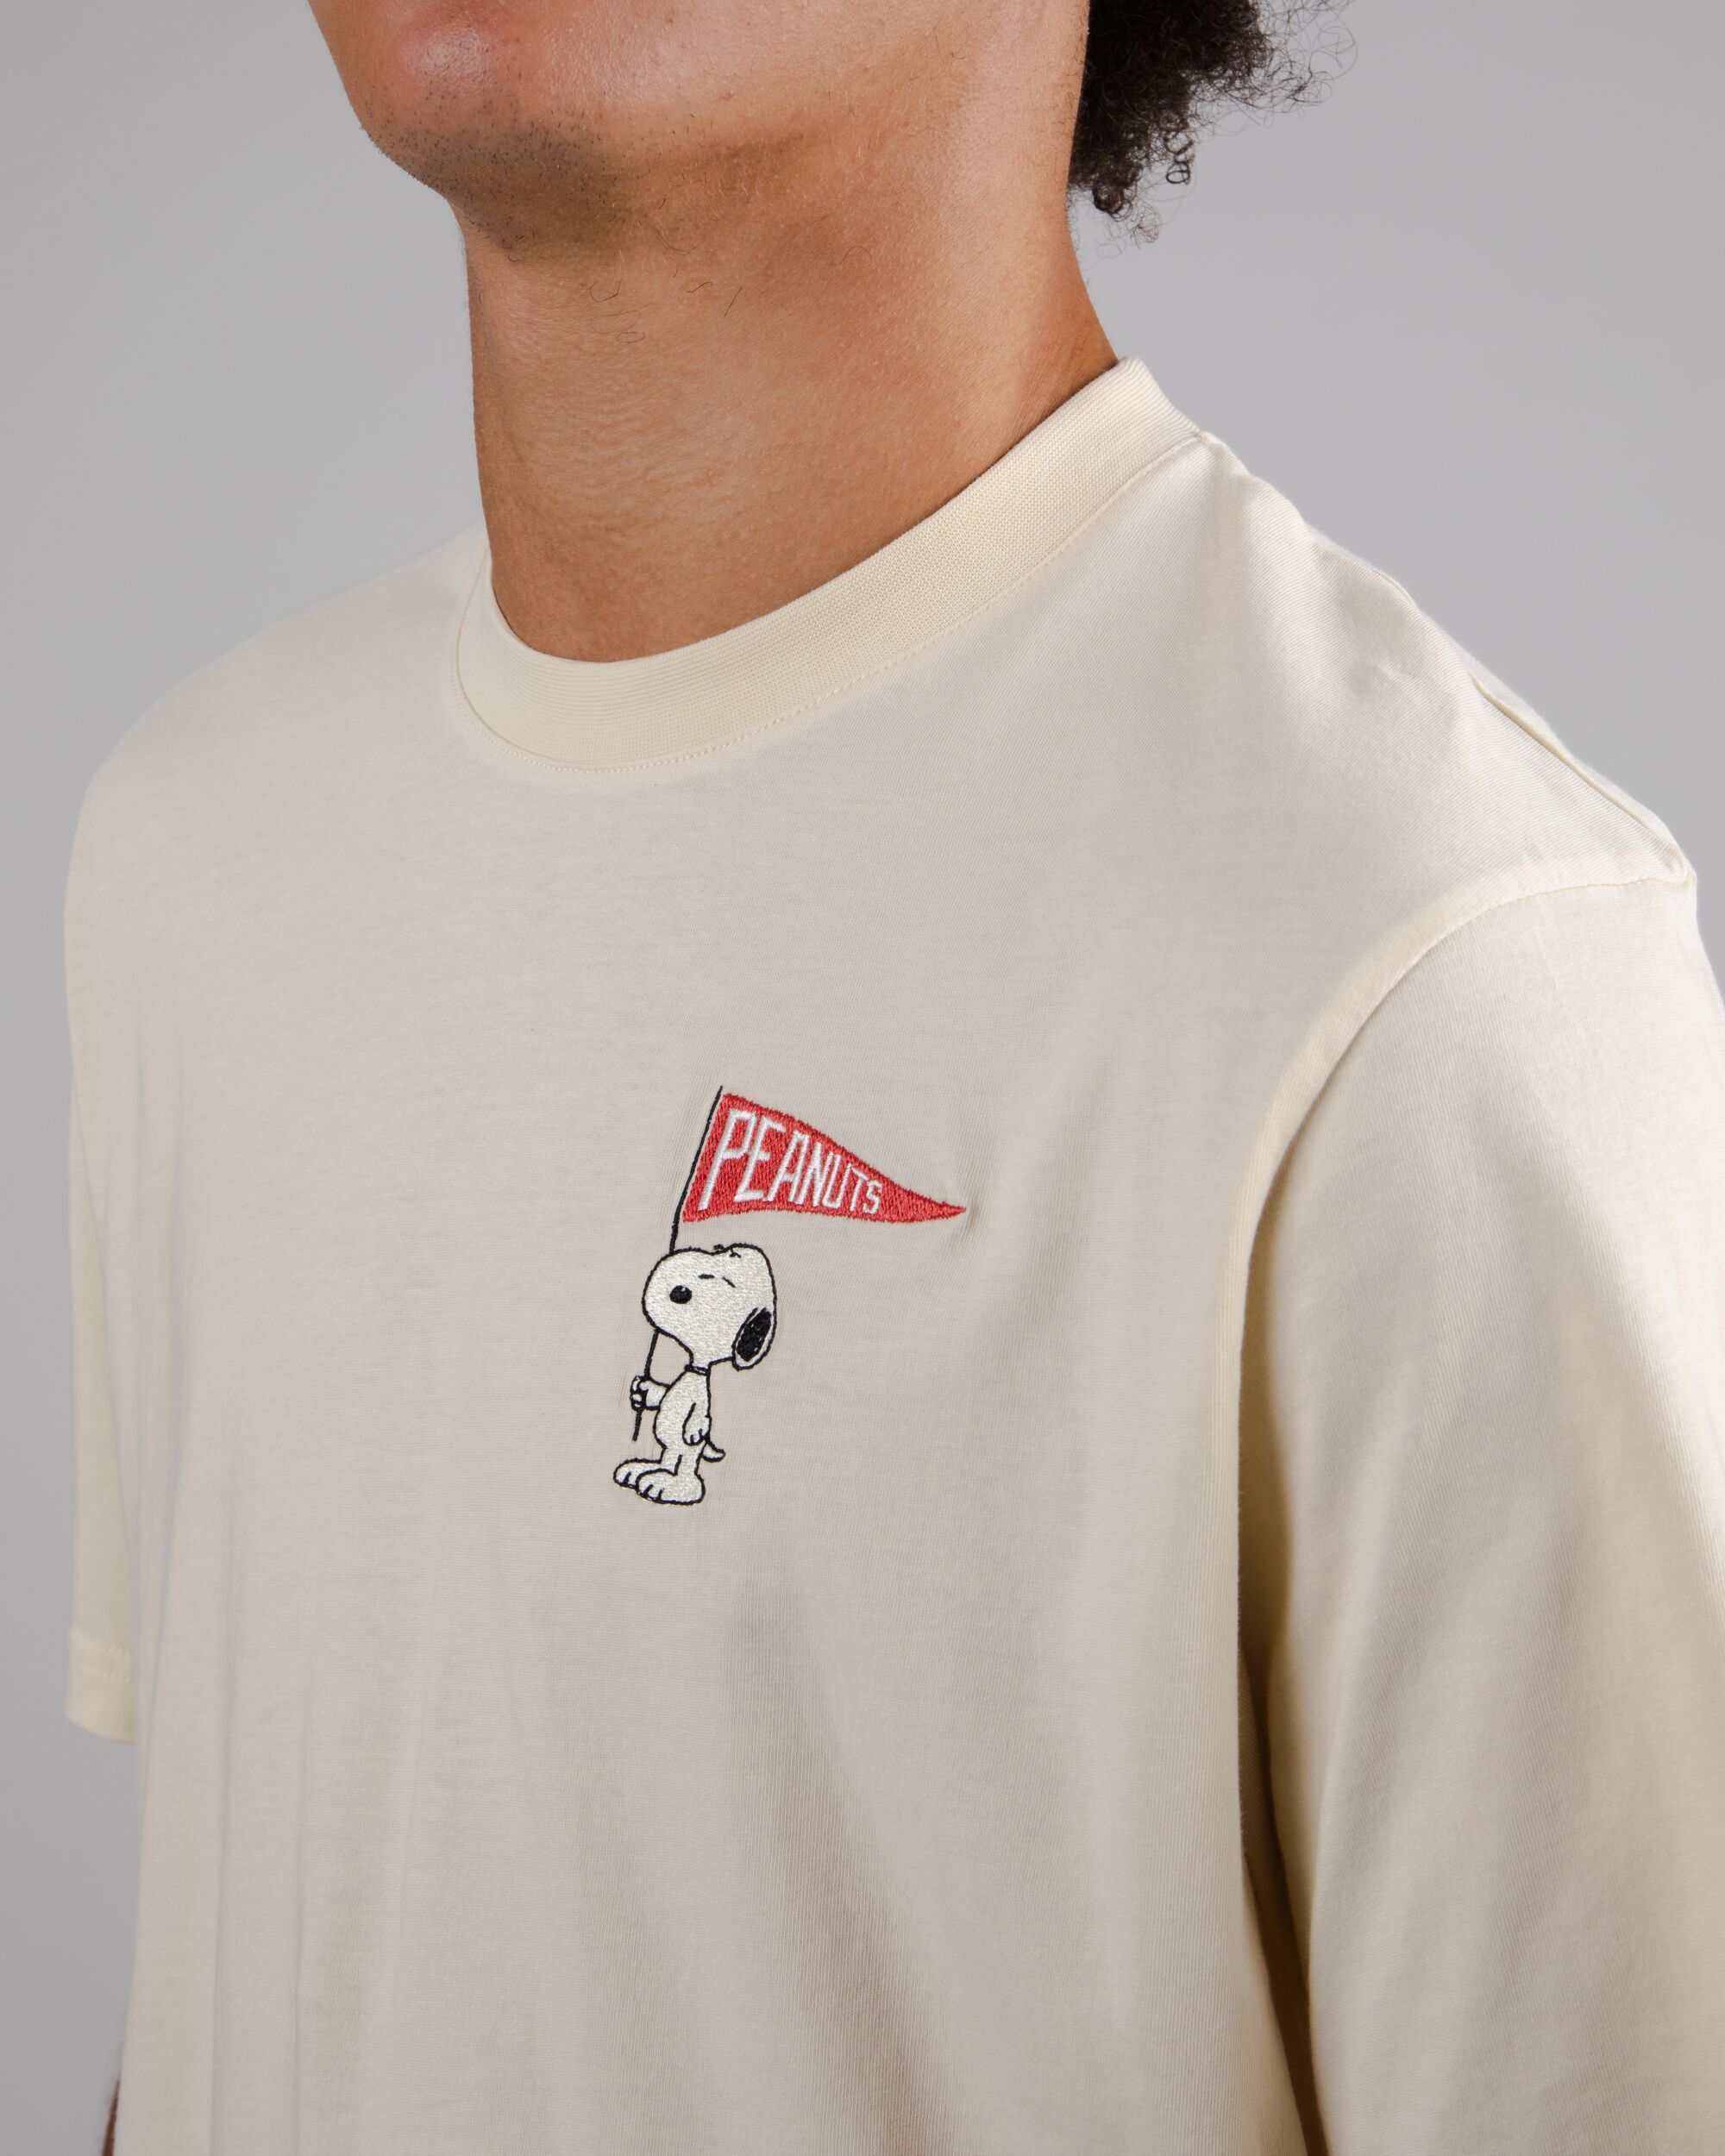 T-shirt Peanuts Athletics en sable en coton biologique de Brava Fabrics